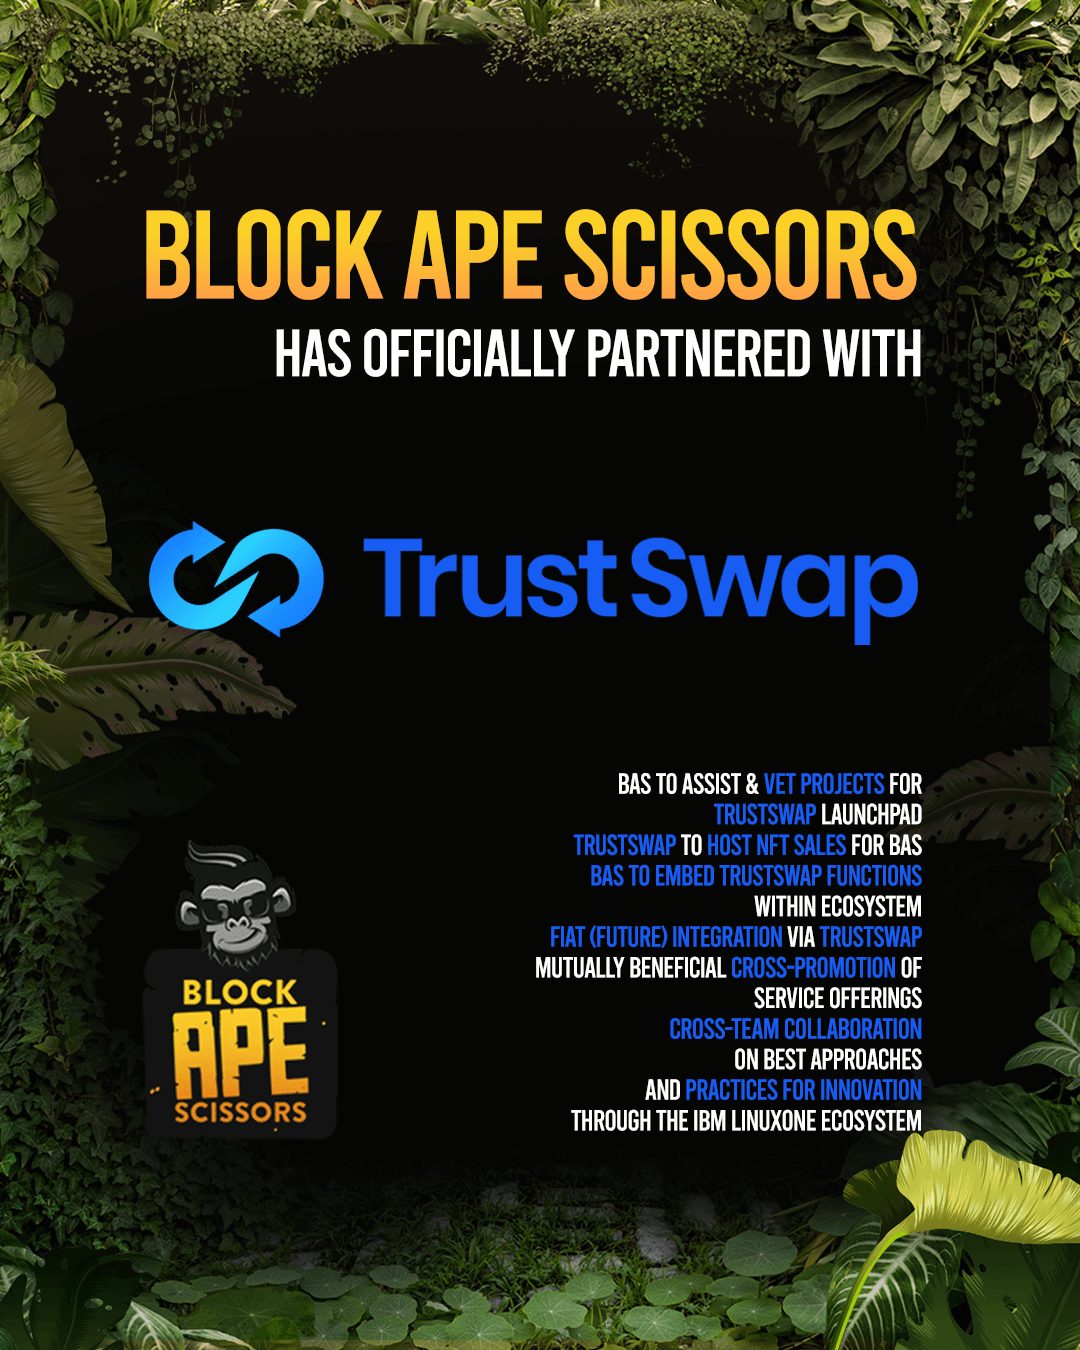 Block Ape Scissors x Trustswap Partnership